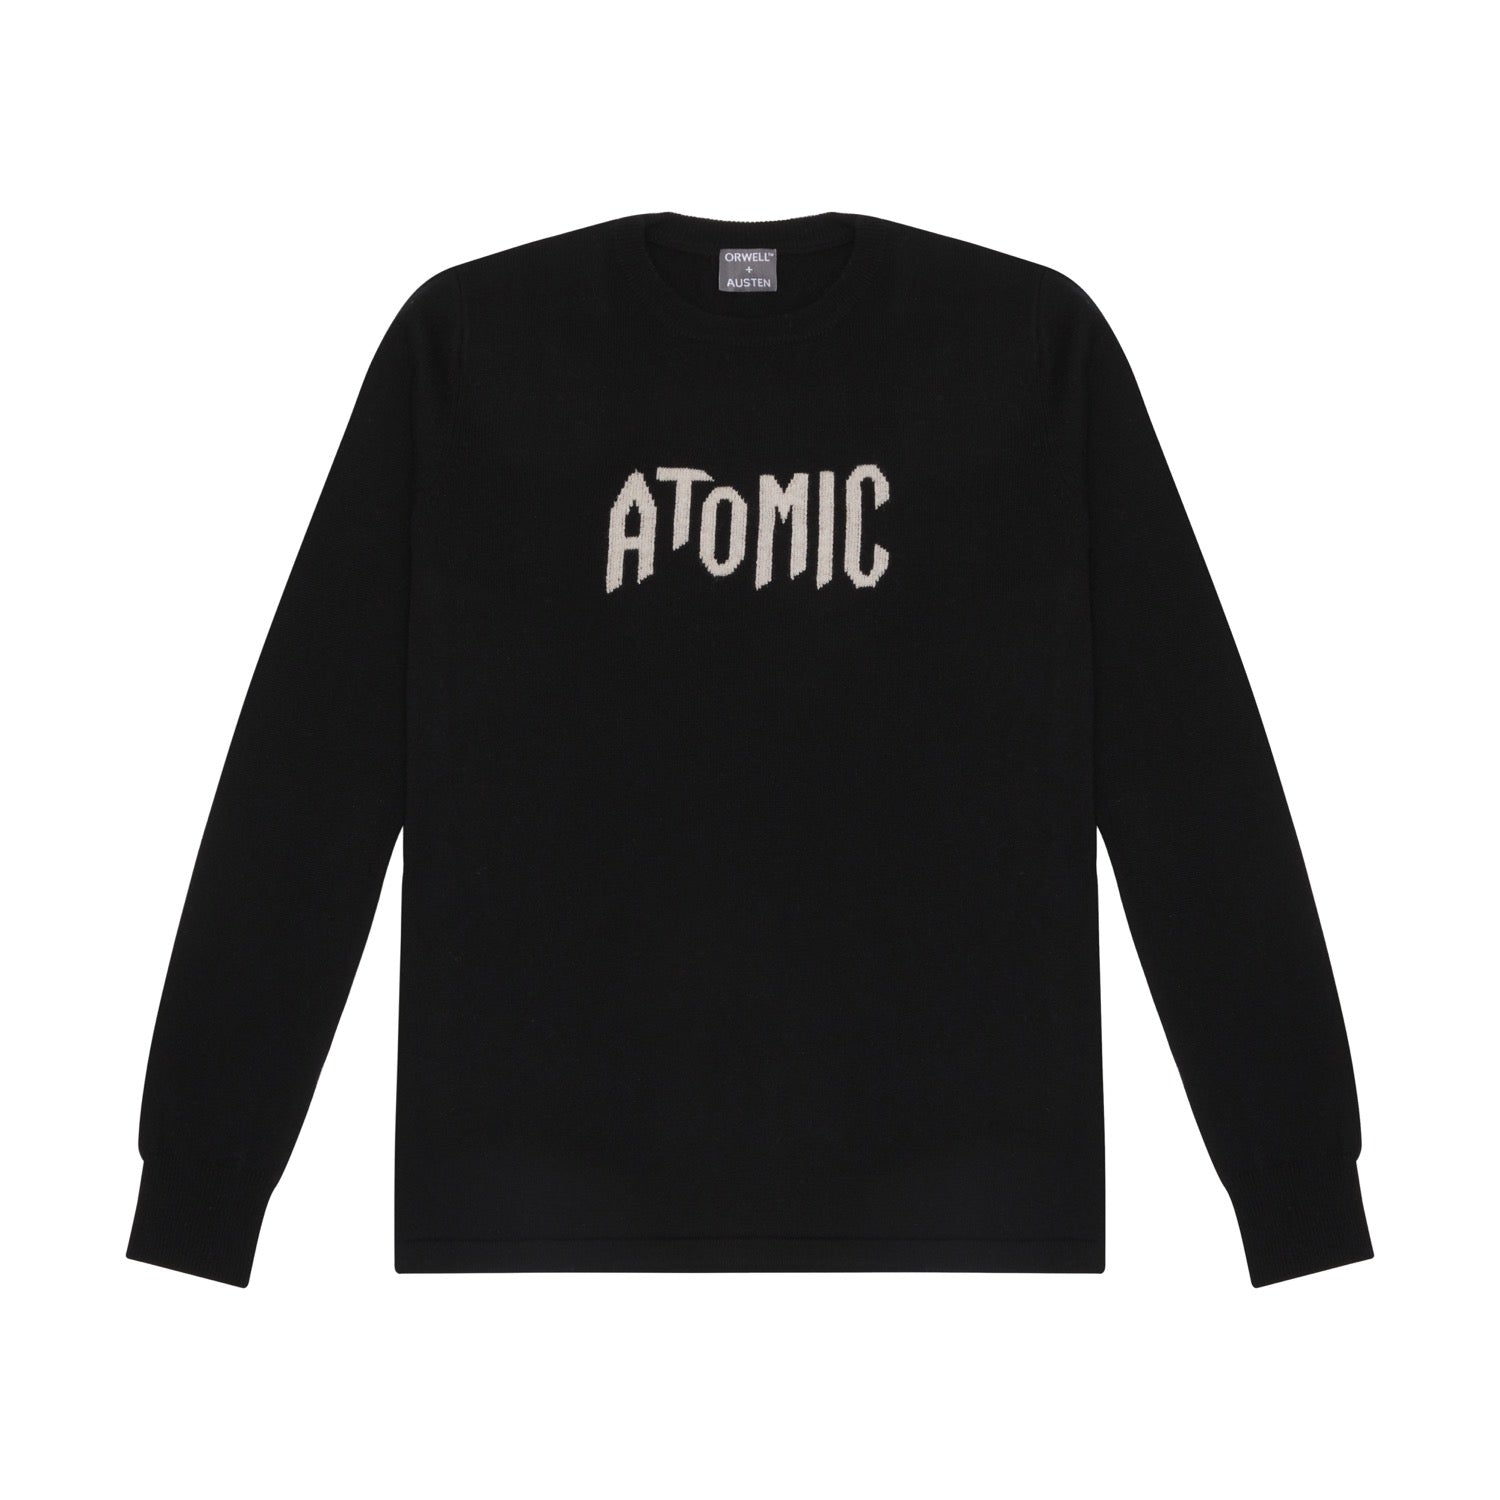 Atomic Cotton Sweater - Orwell + Austen